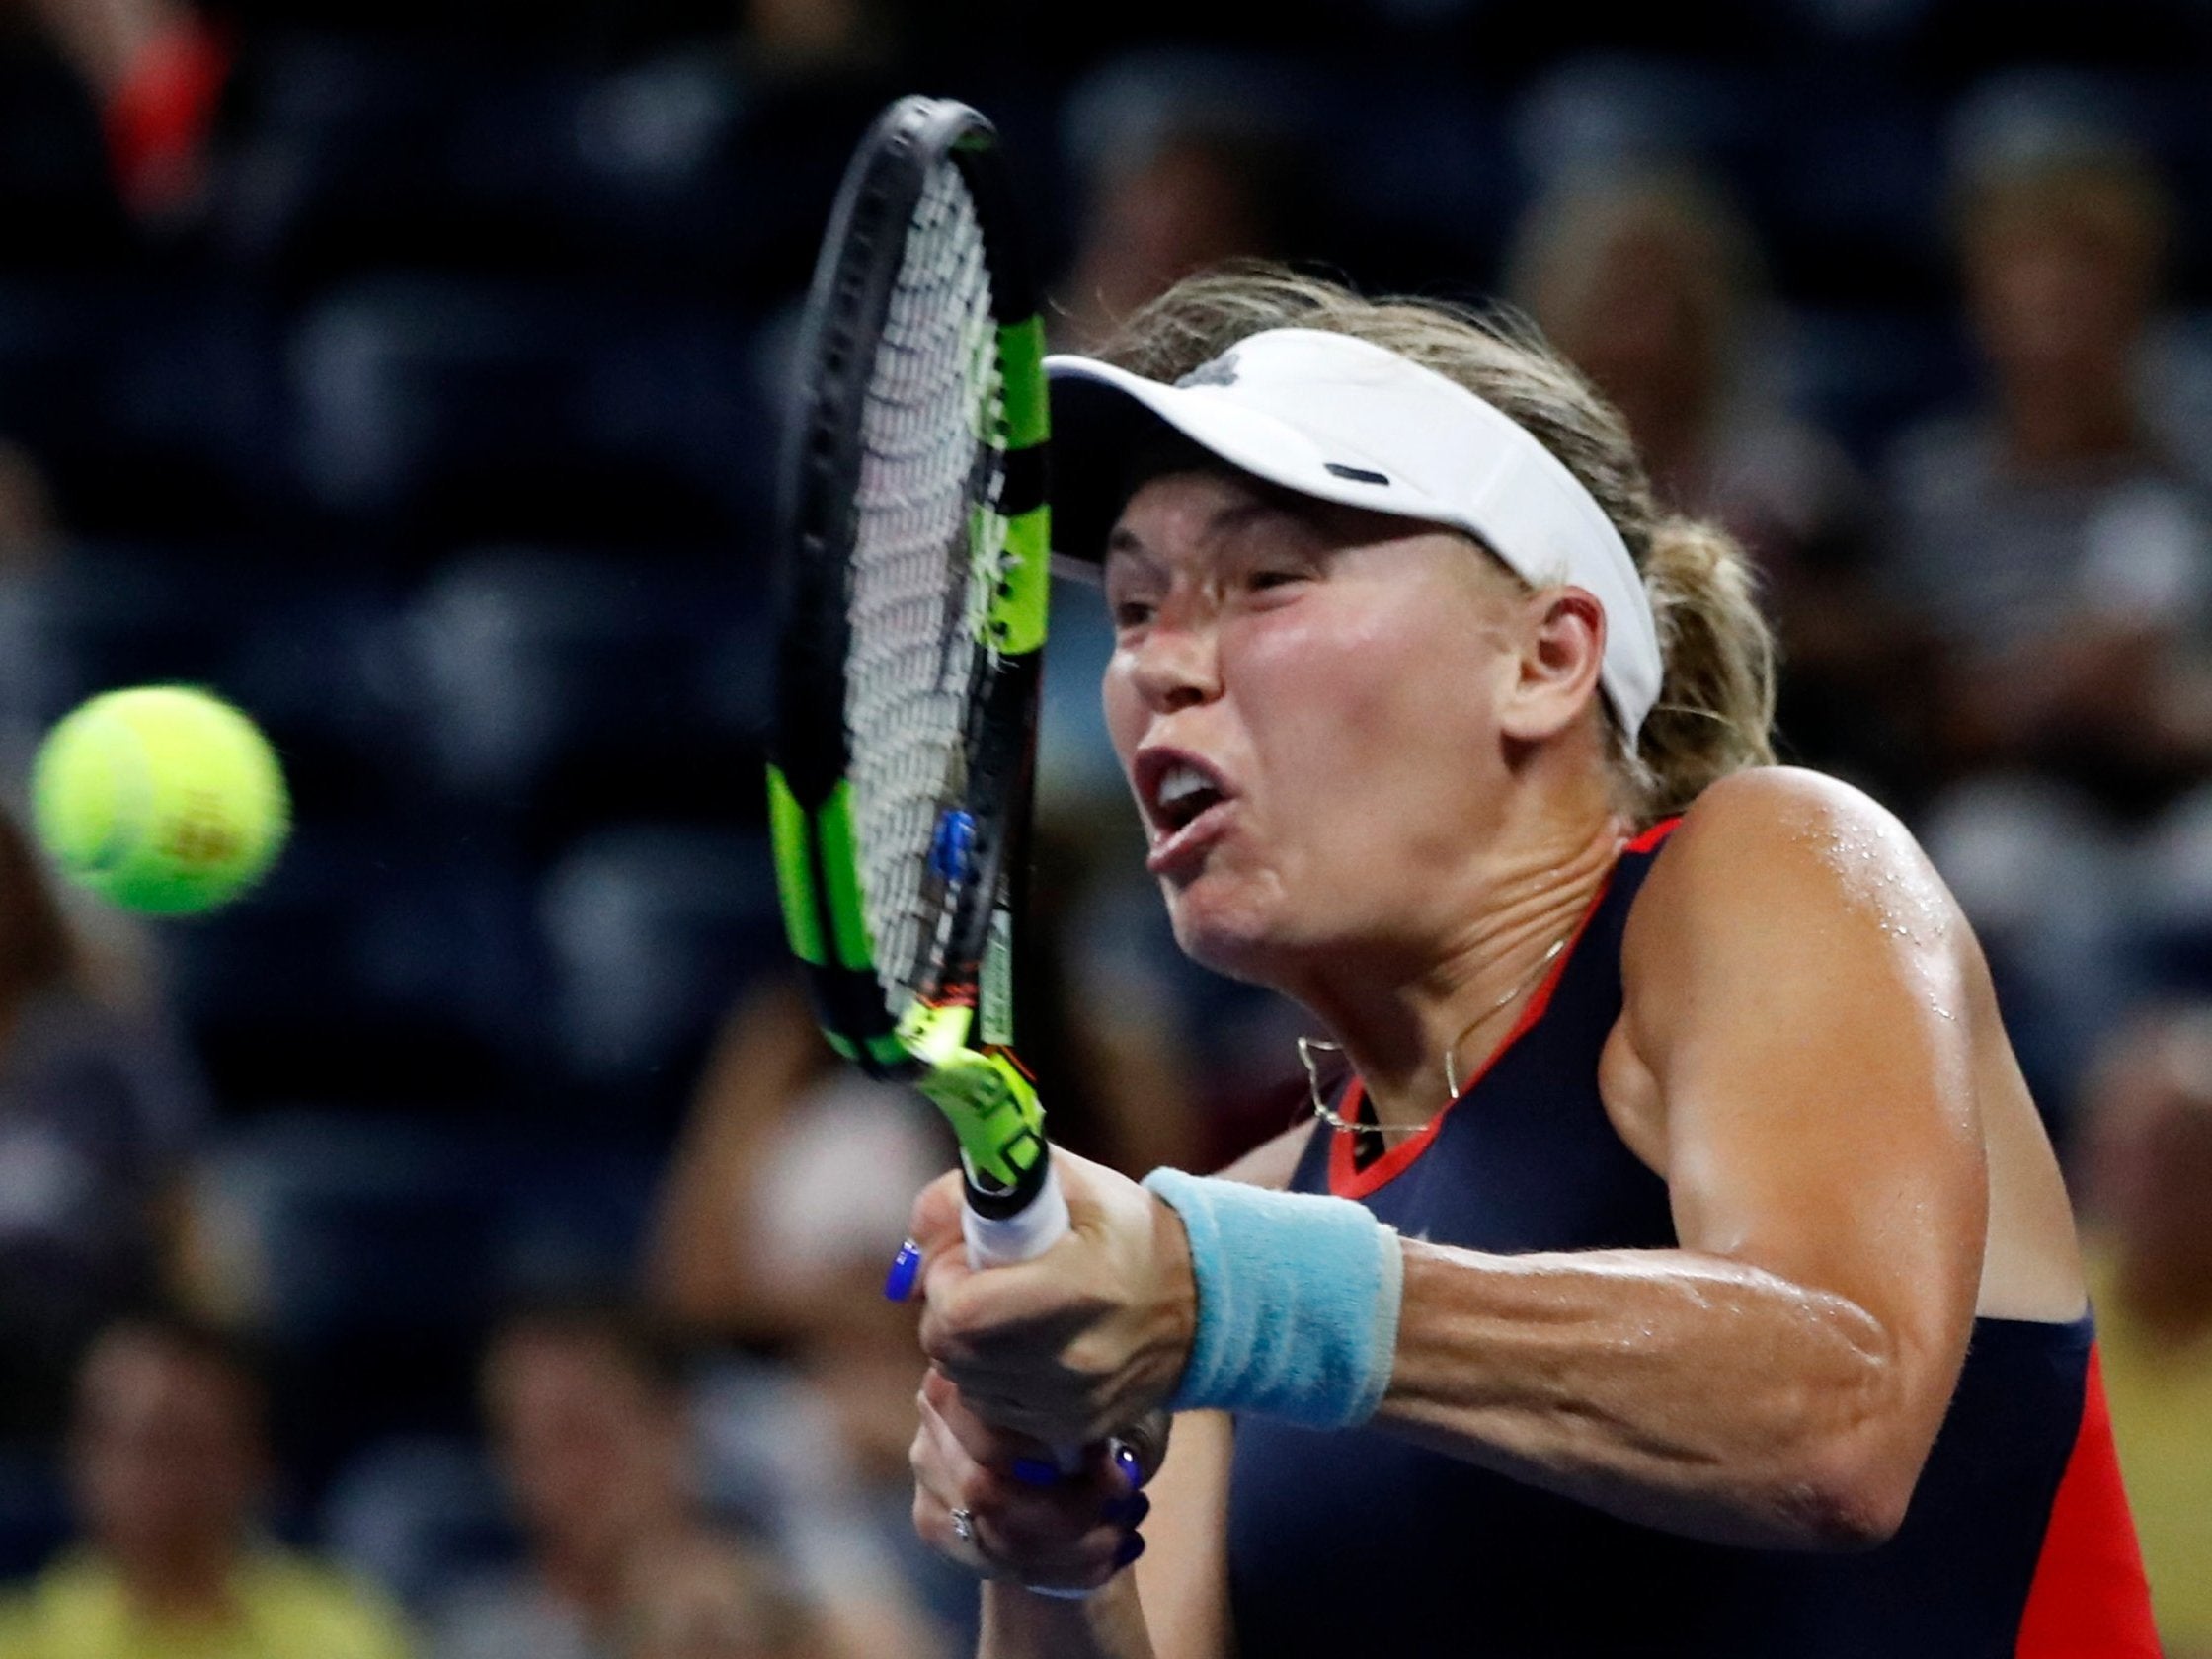 Wozniacki has won just two matches since winning the Australian Open